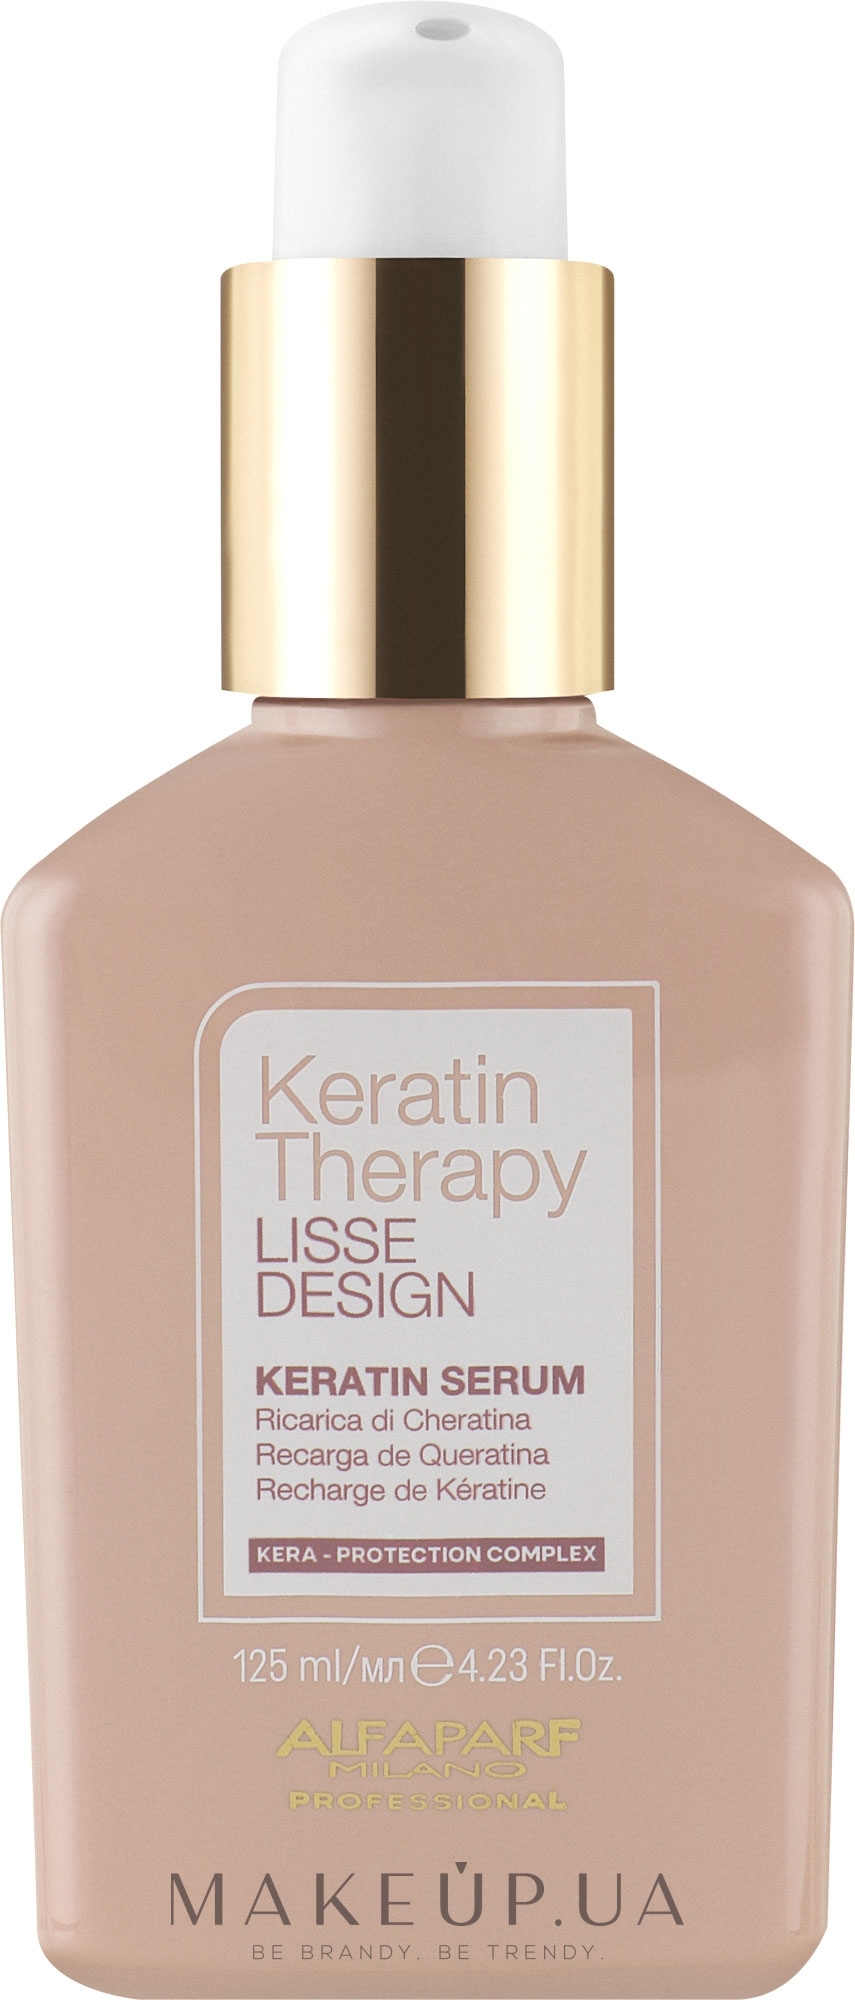 Сыворотка для волос - Alfaparf Keratin Therapy Lisse Design Keratin Serum — фото 125ml